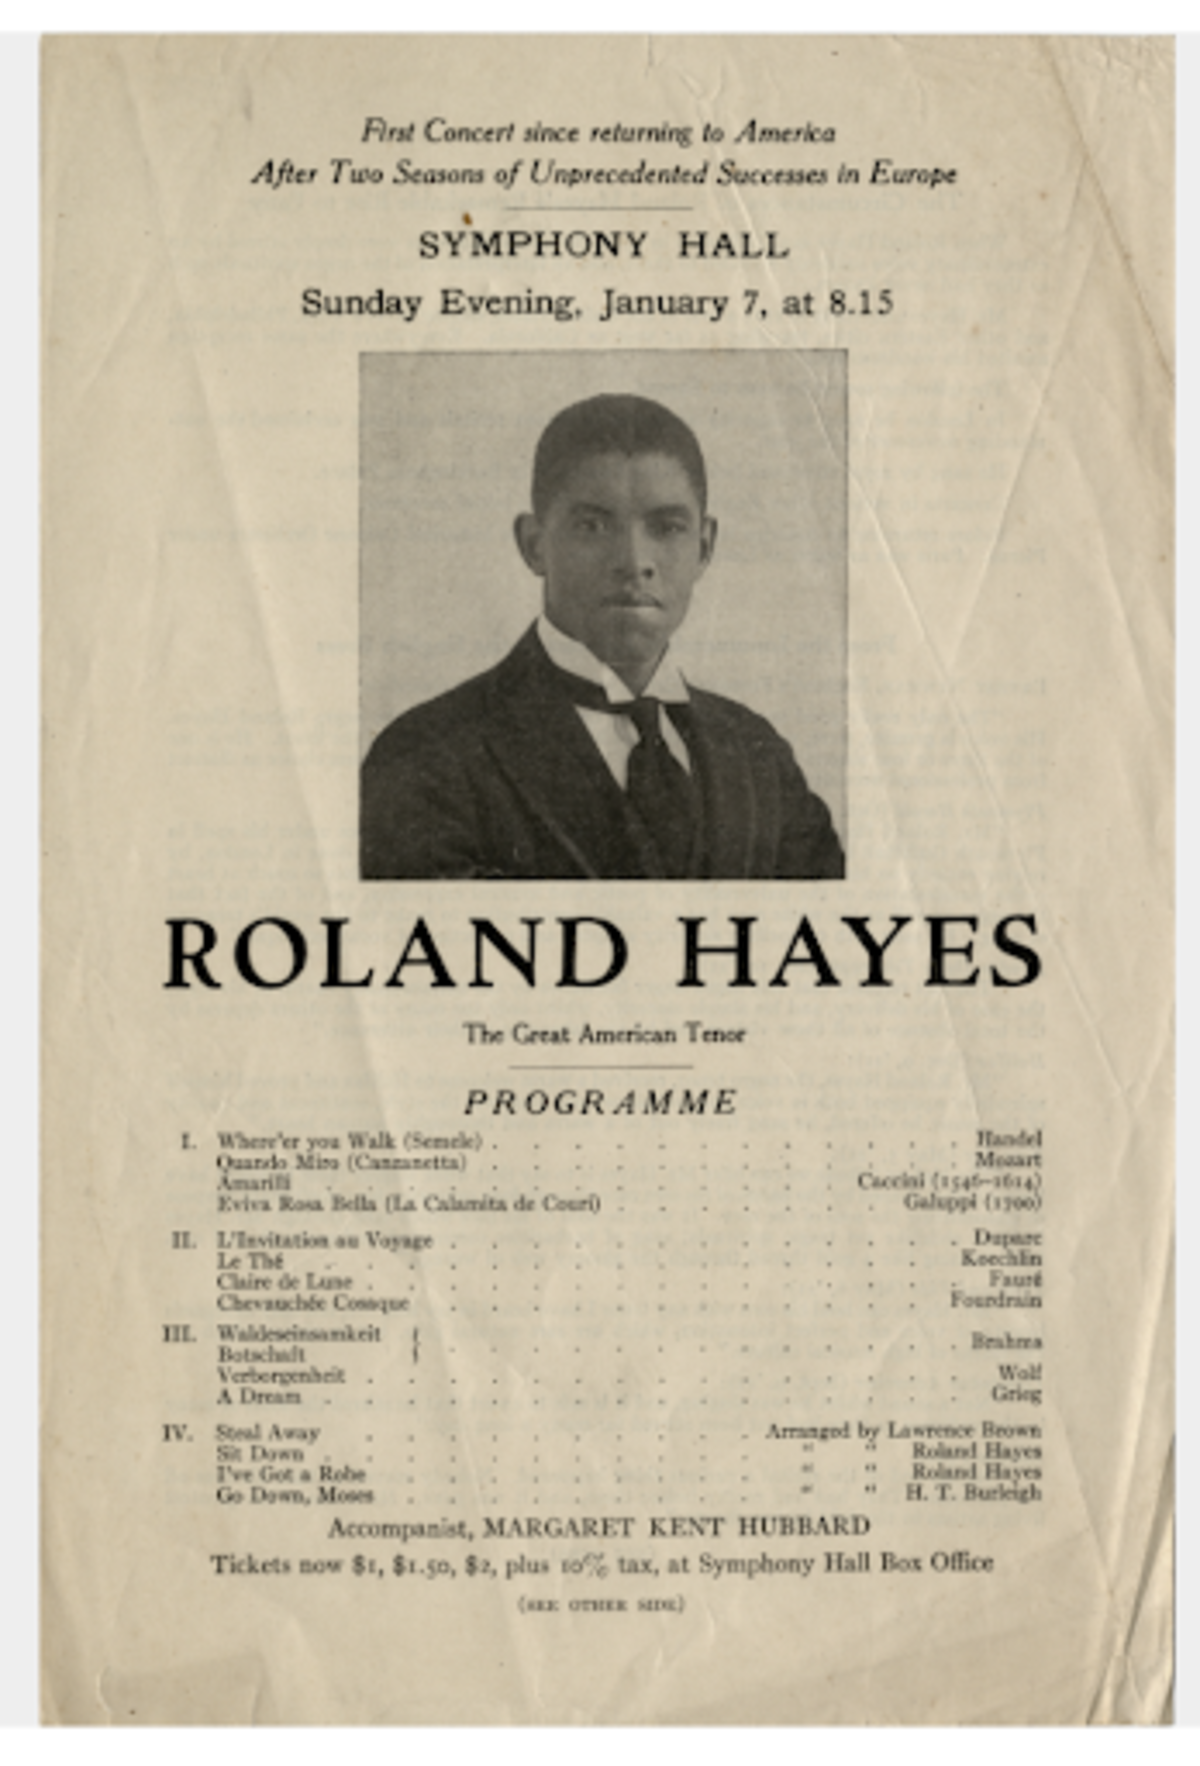 Roland Hayes concert program, Symphony Hall, Boston, MA., January 7, 1923, Detroit Public Library